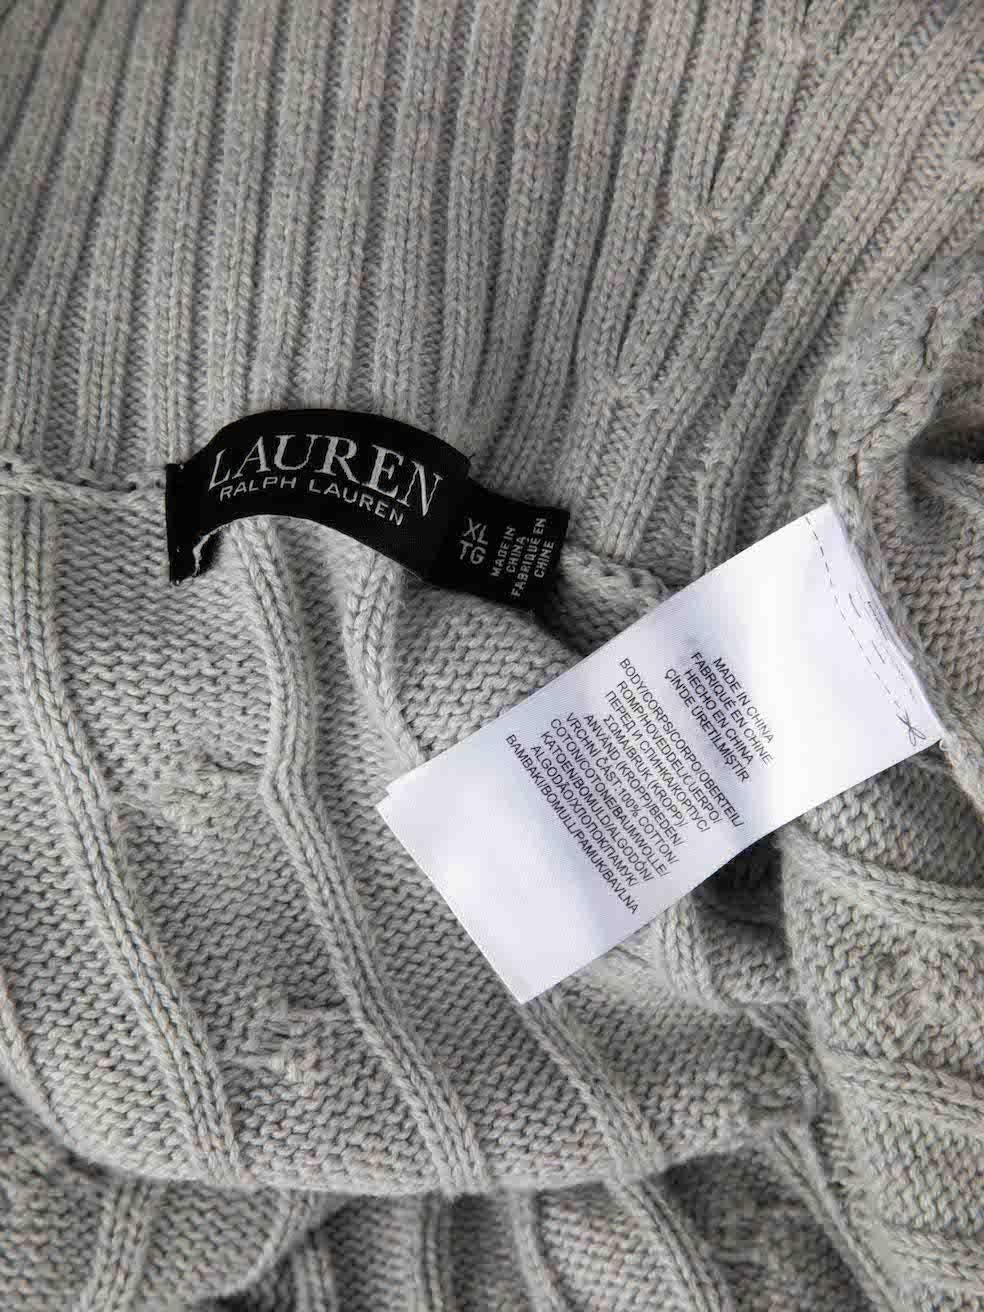 Ralph Lauren Lauren by Ralph Lauren Grey Knit Buckled Knit Wrap Top Size XL For Sale 2